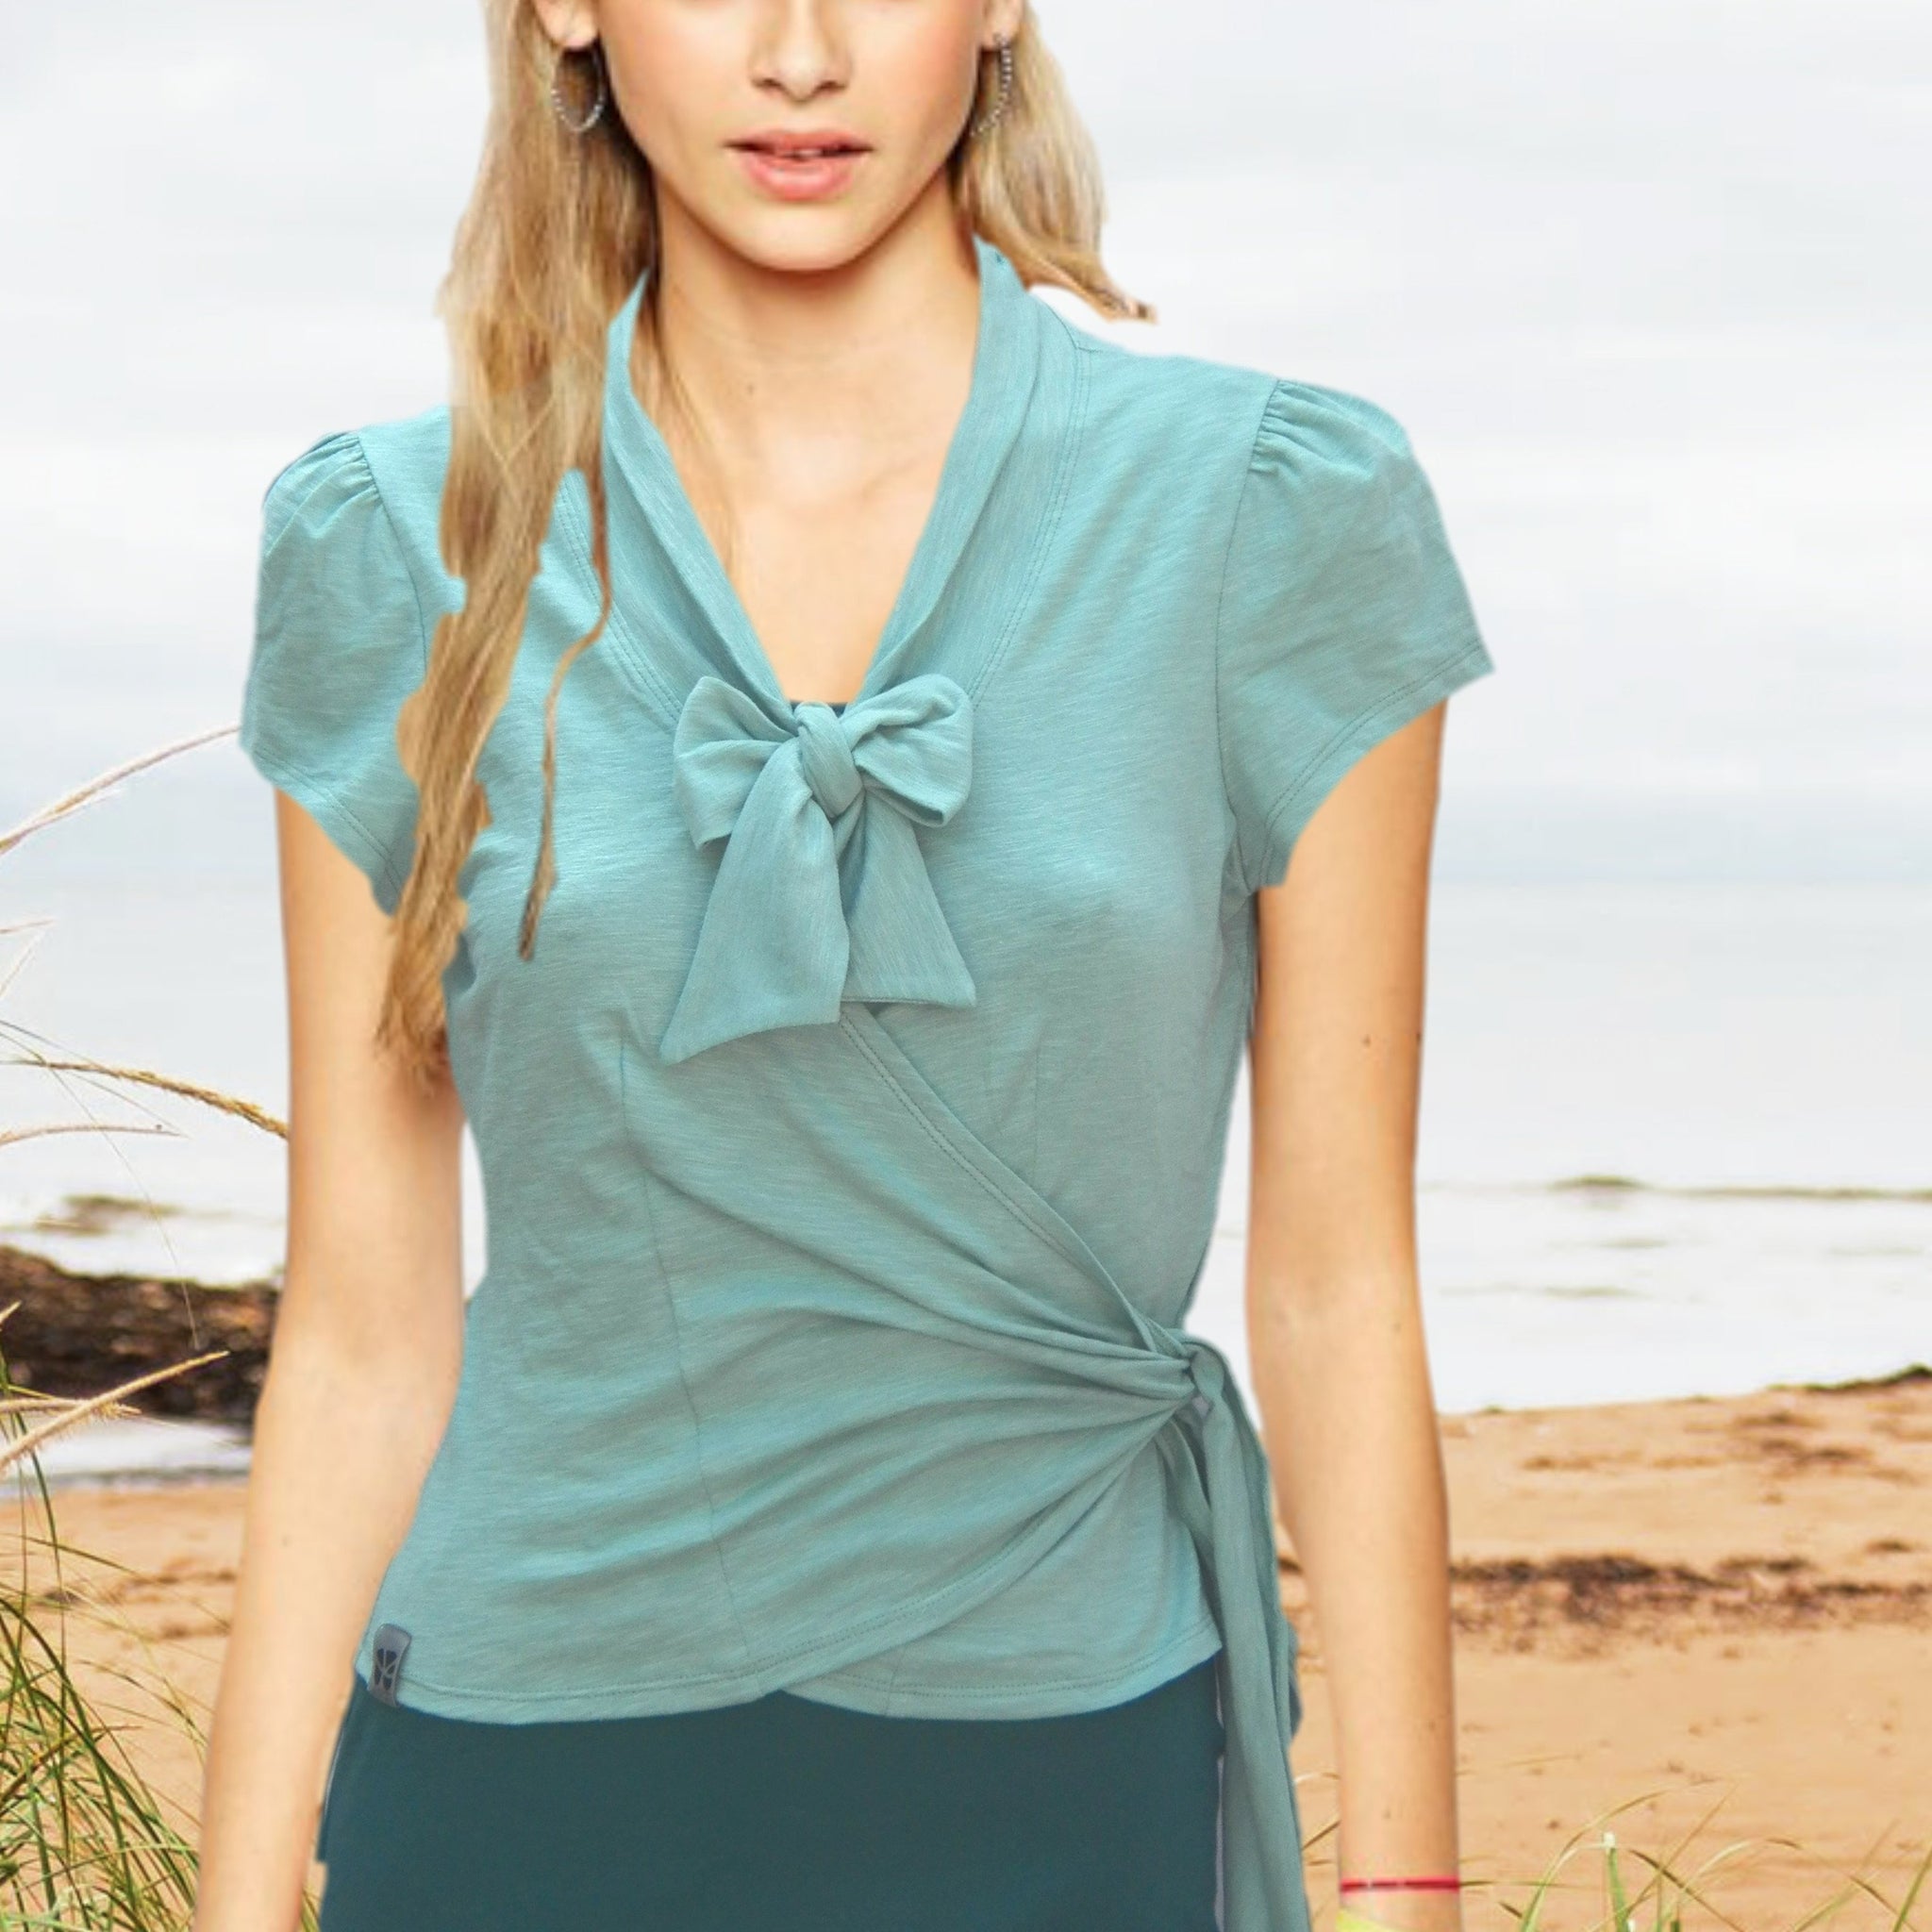 Overslag blouse-vestje van slubtricot/ wrap shirt made of organic cotton slubjersey